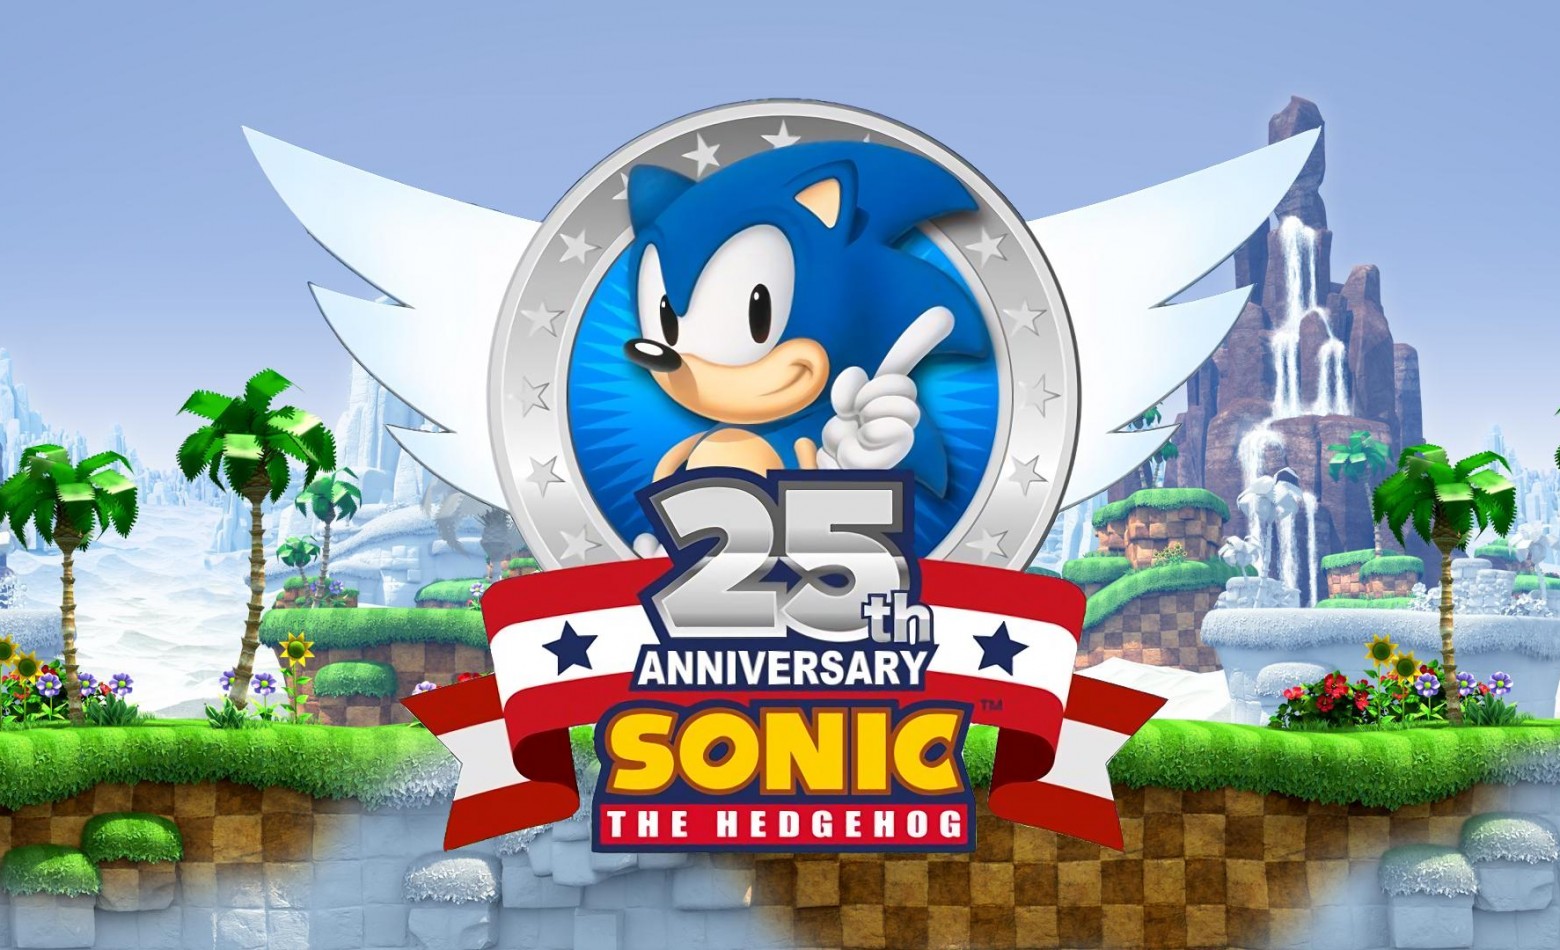 Sonic comemora 25 anos, e o que temos para celebrar?